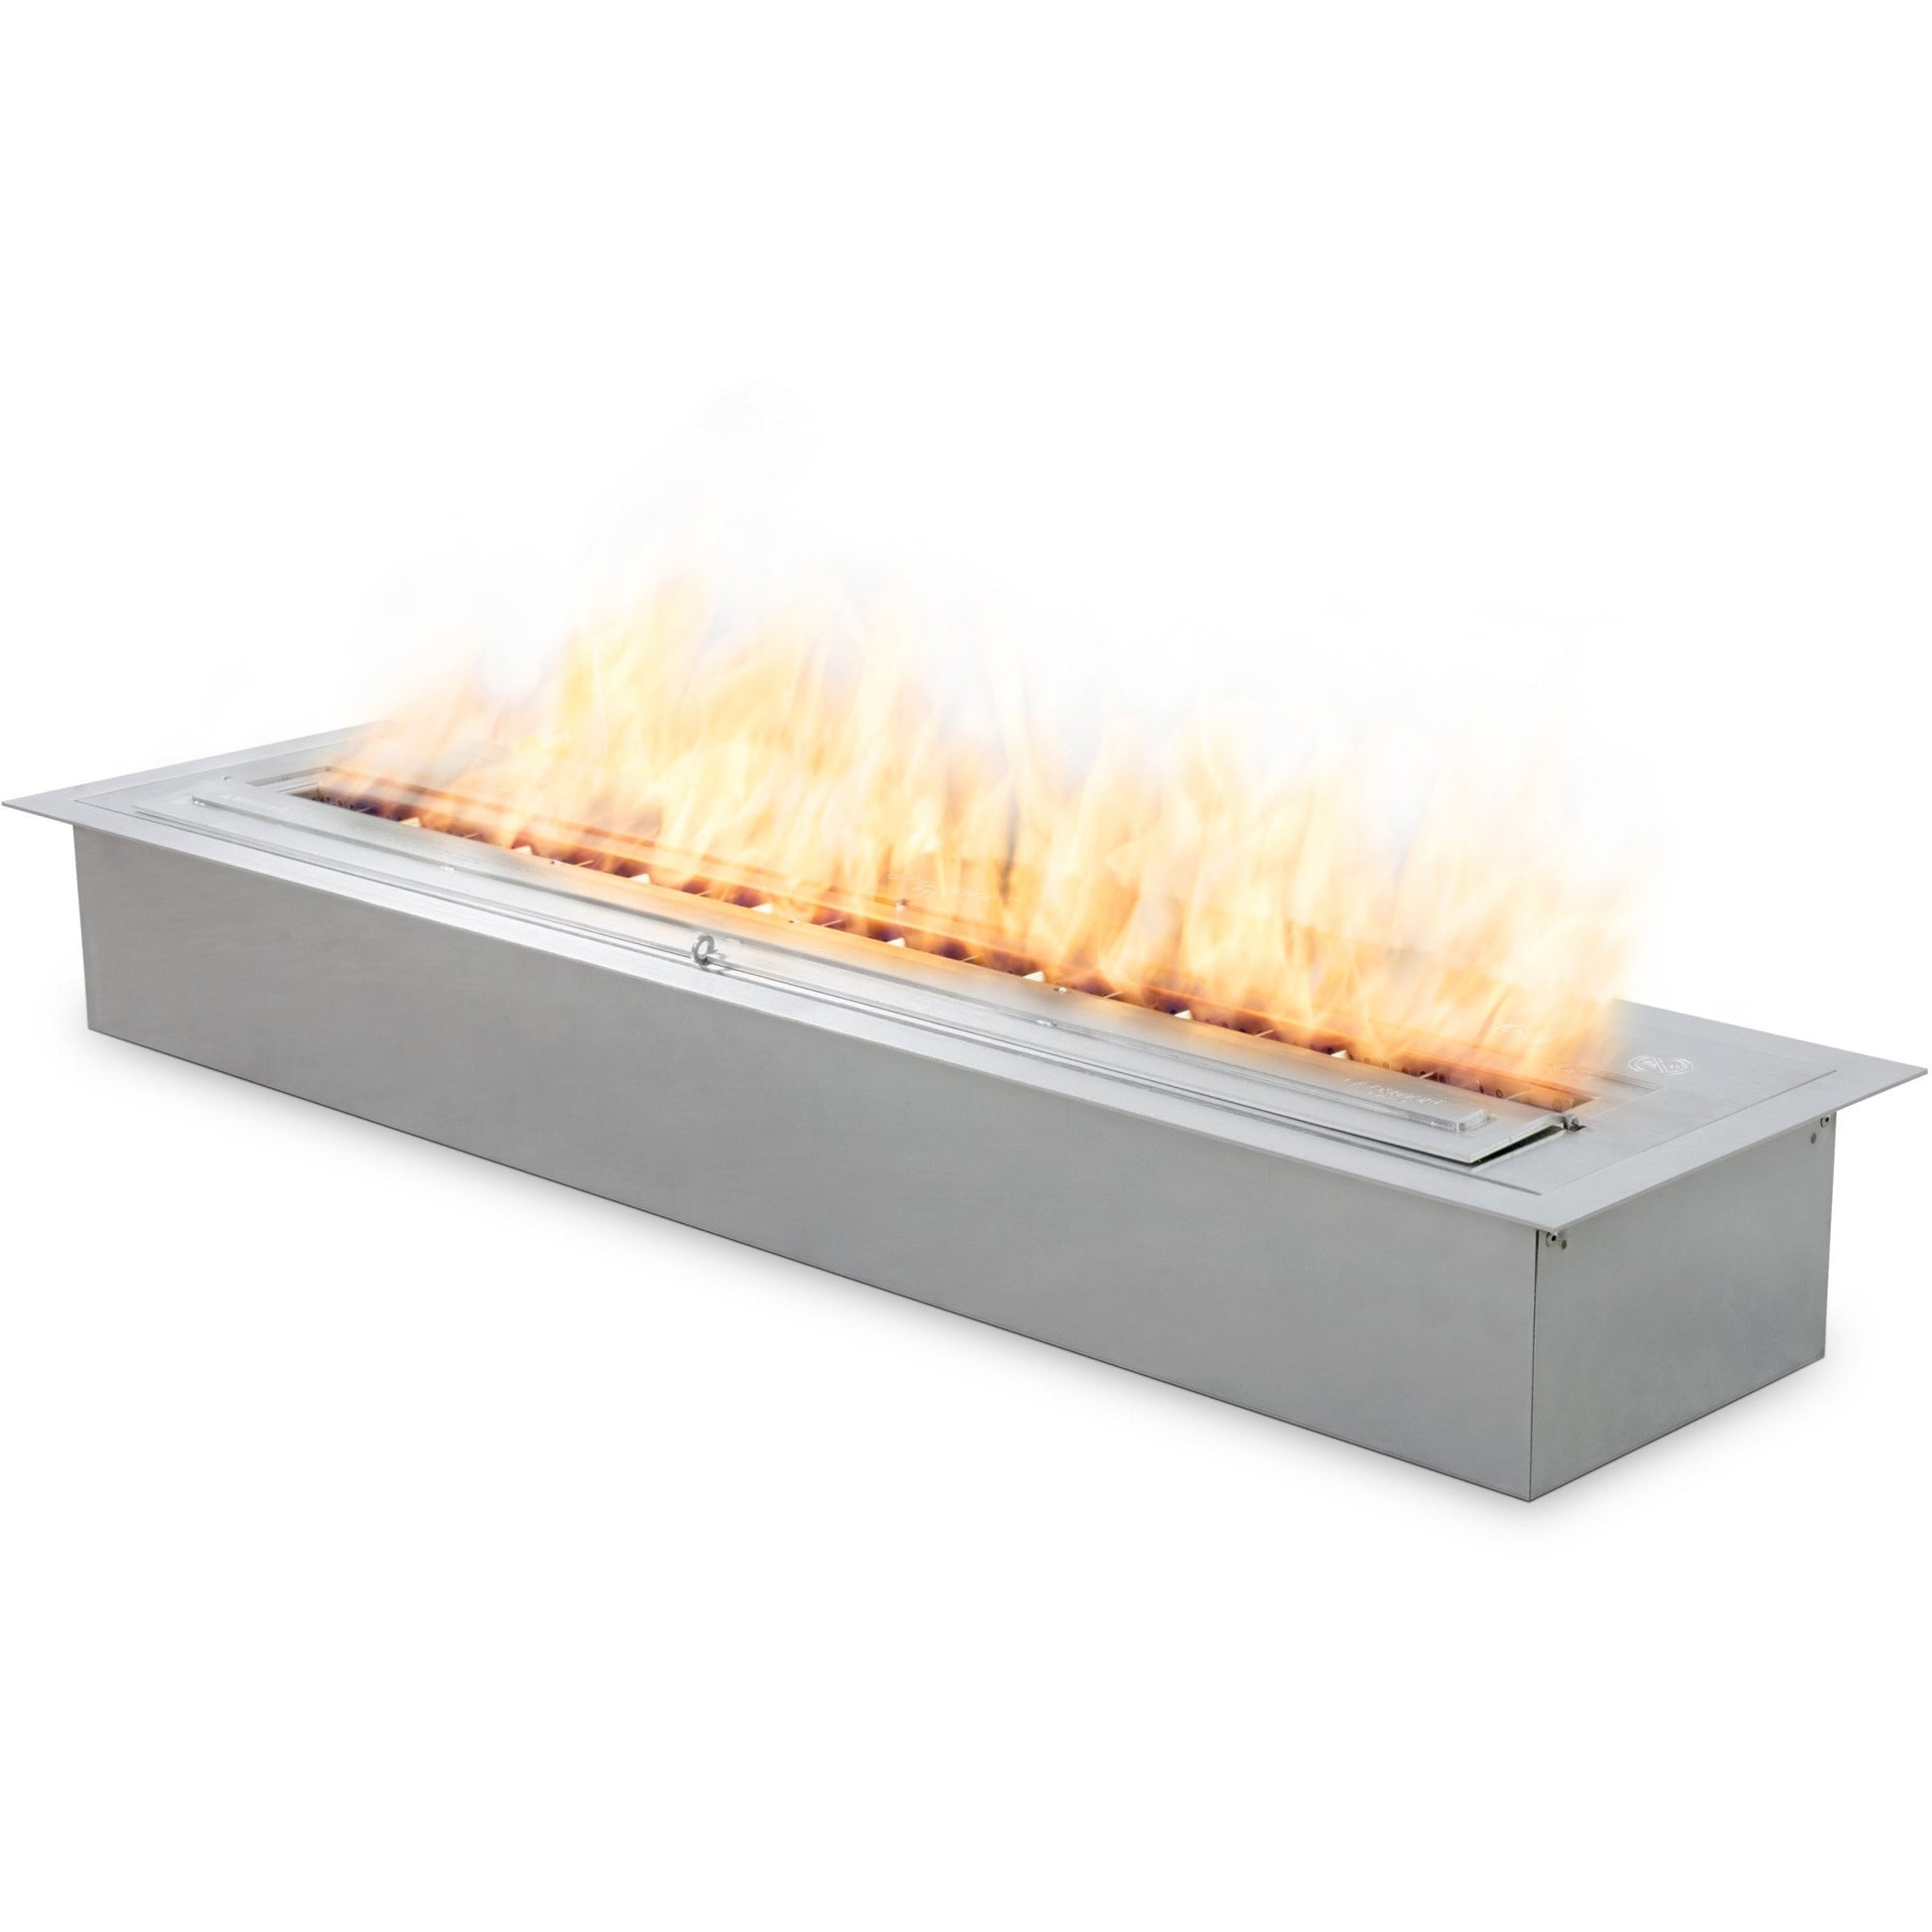 Linear 50 Fire Place Kit with XL900 Bio Ethanol Burner - EcoSmart Fire - Alfresco Heat